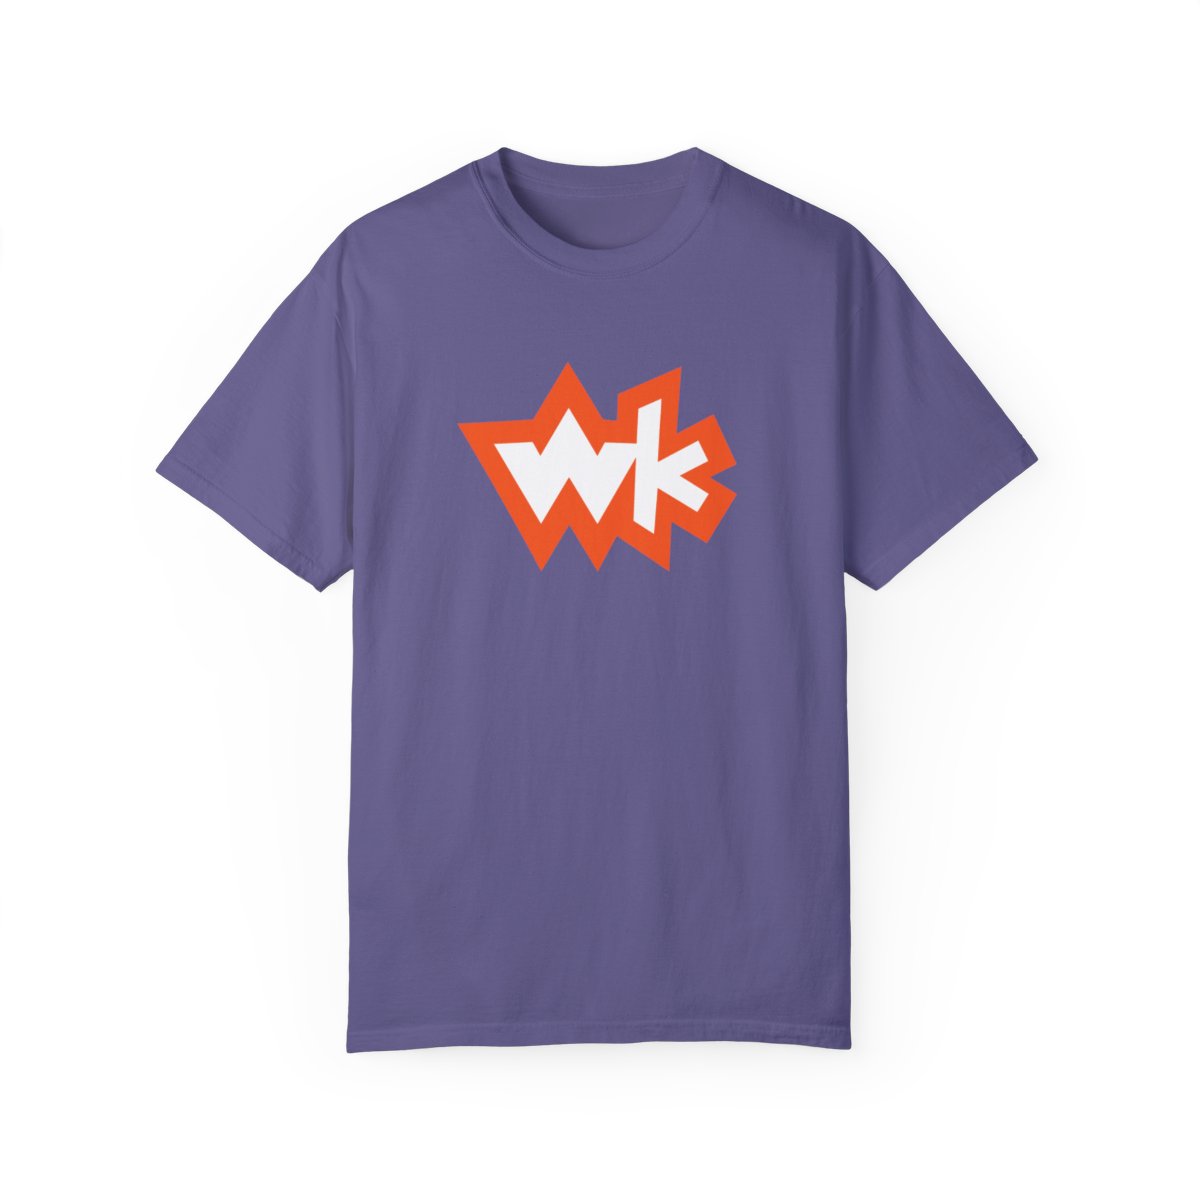 WK Adult T-Shirt product thumbnail image